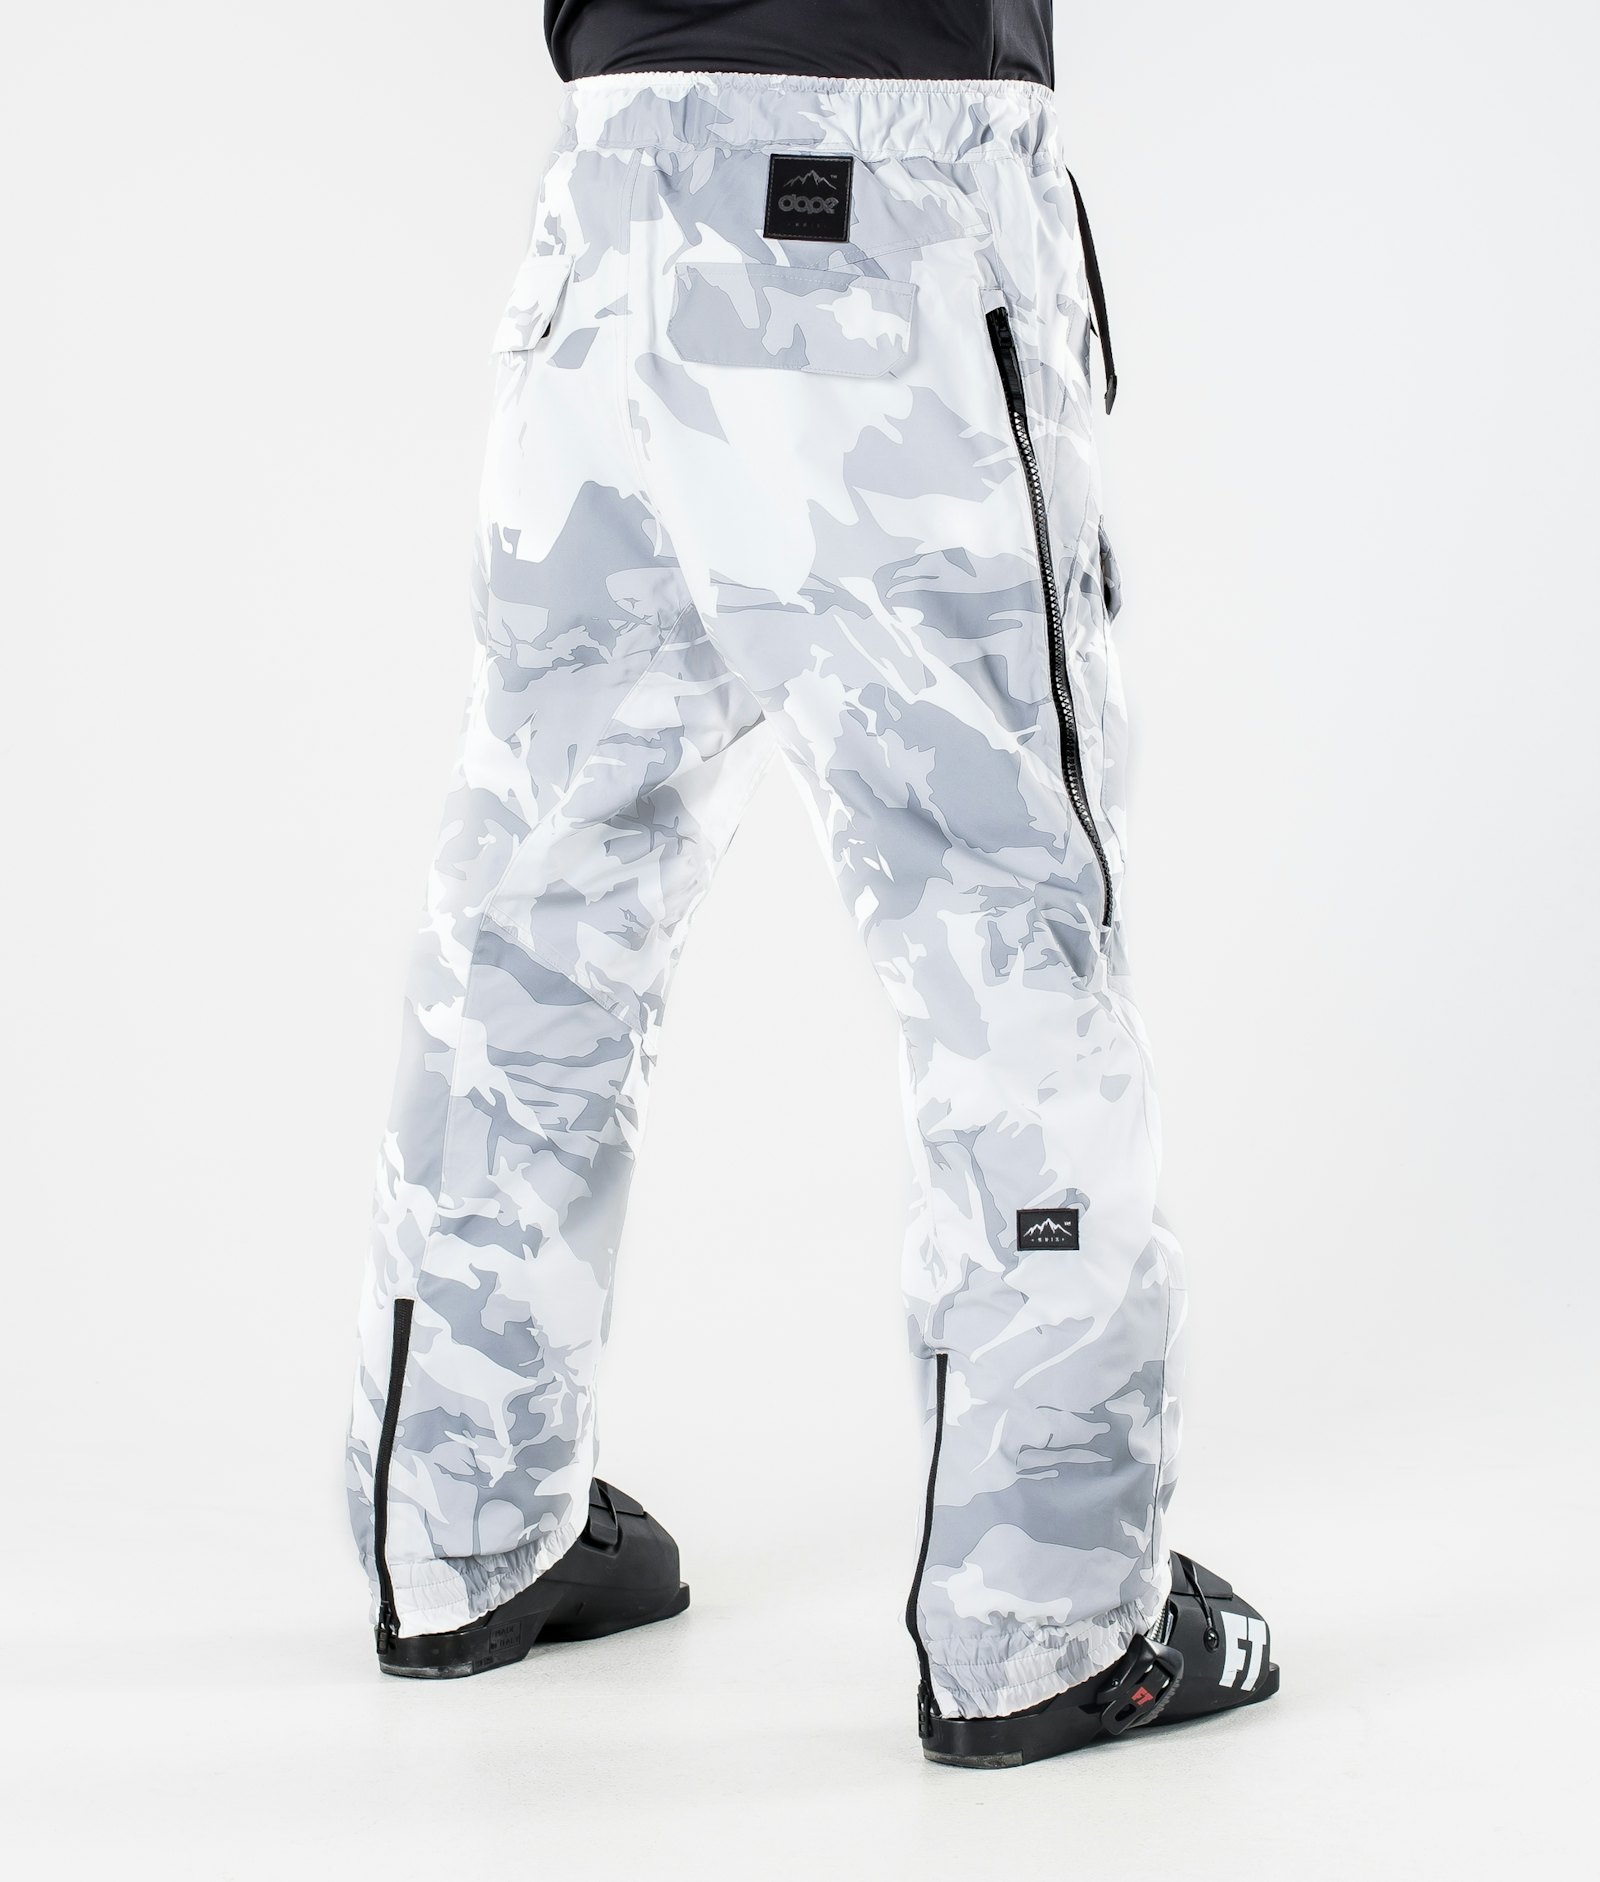 Antek 2020 スキーパンツ メンズ Tucks Camo